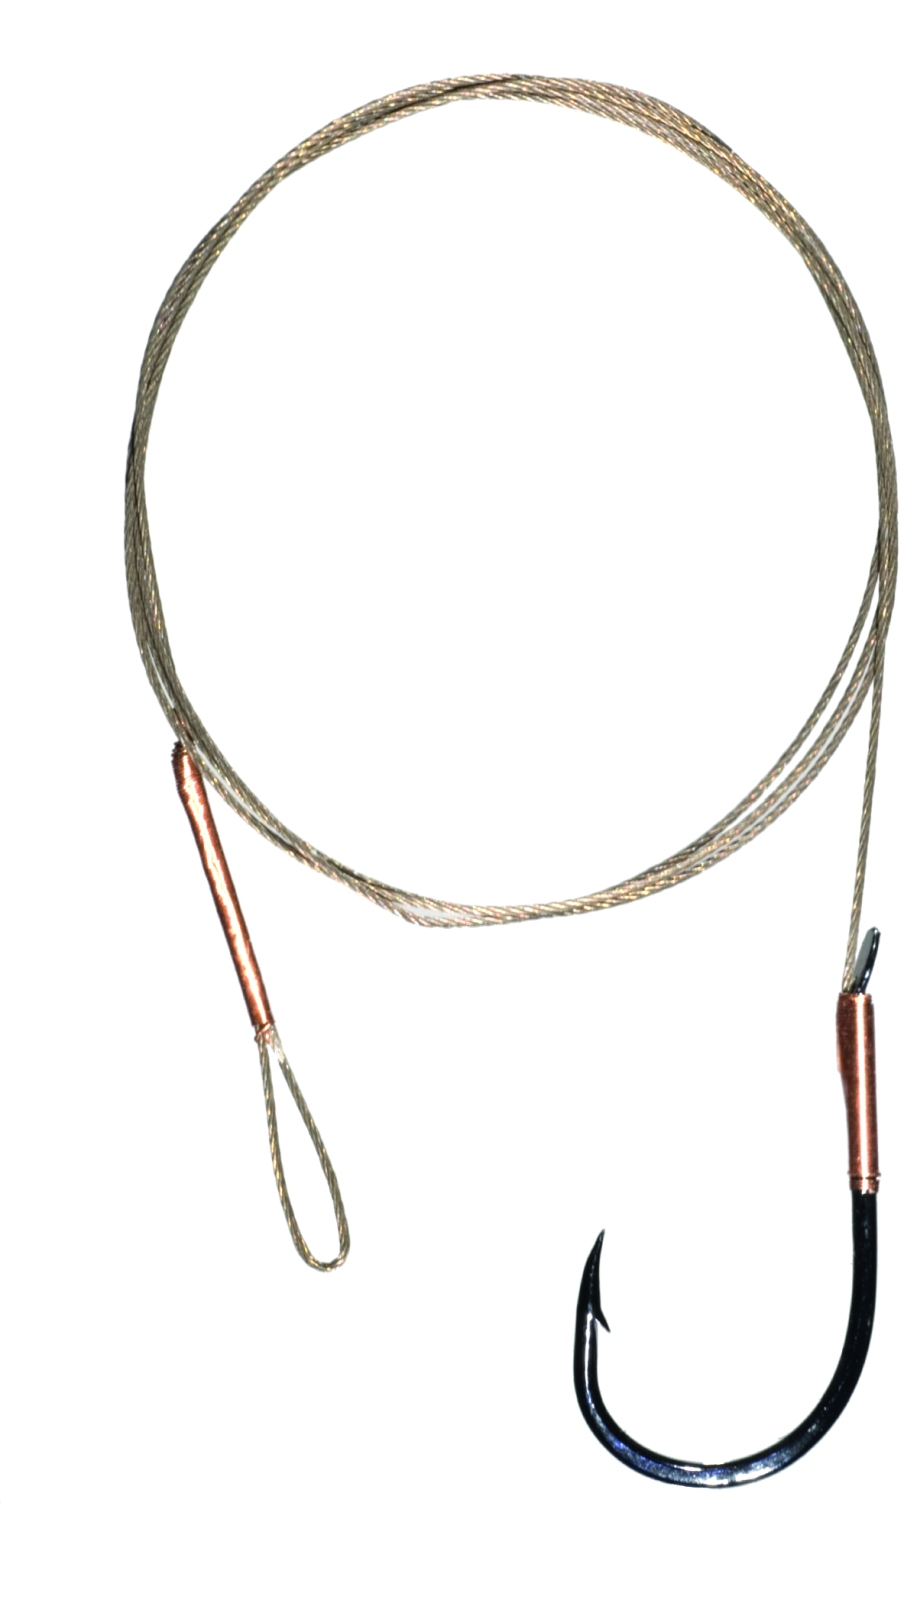 4151/4 single hook on steel - 2 pcs/pack